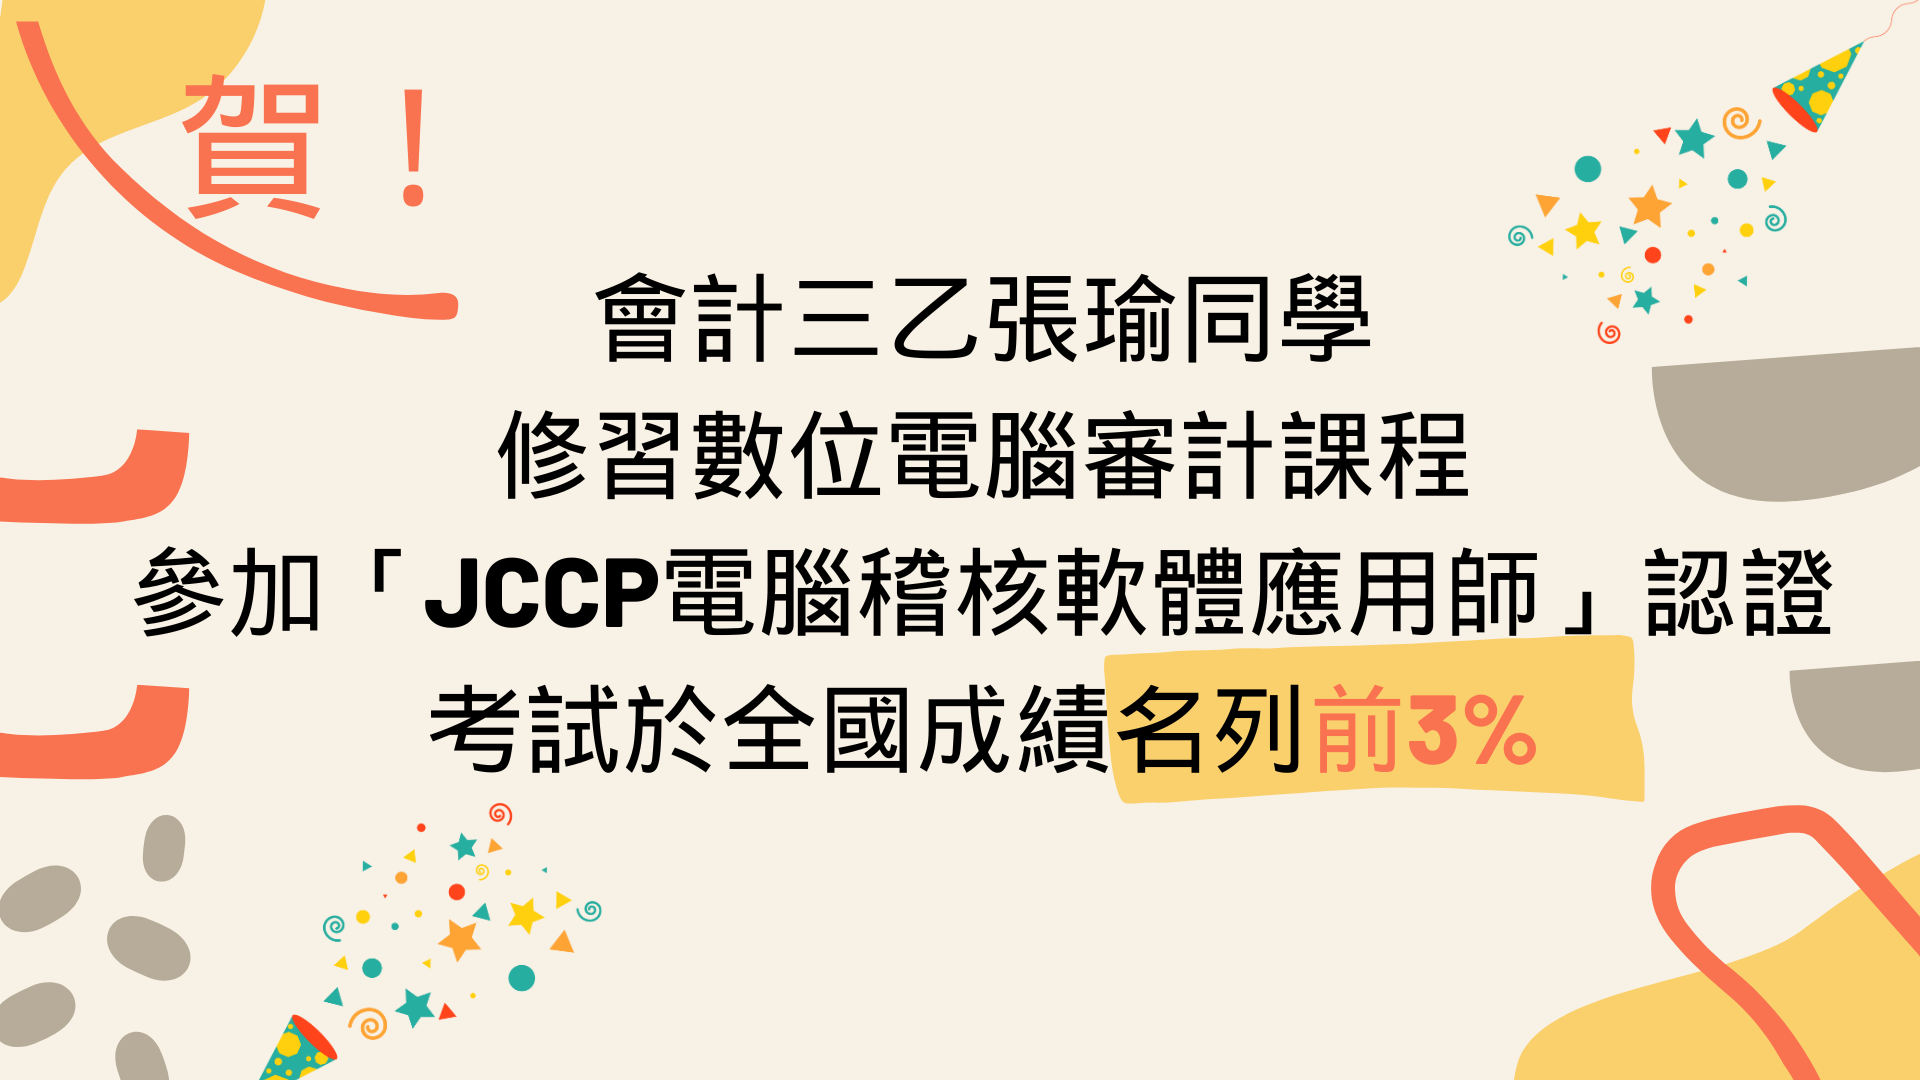 Featured image for “【競賽榮譽】狂賀！參加「JCCP電腦稽核軟體應用師」認證考試於全國成績名列前3%”